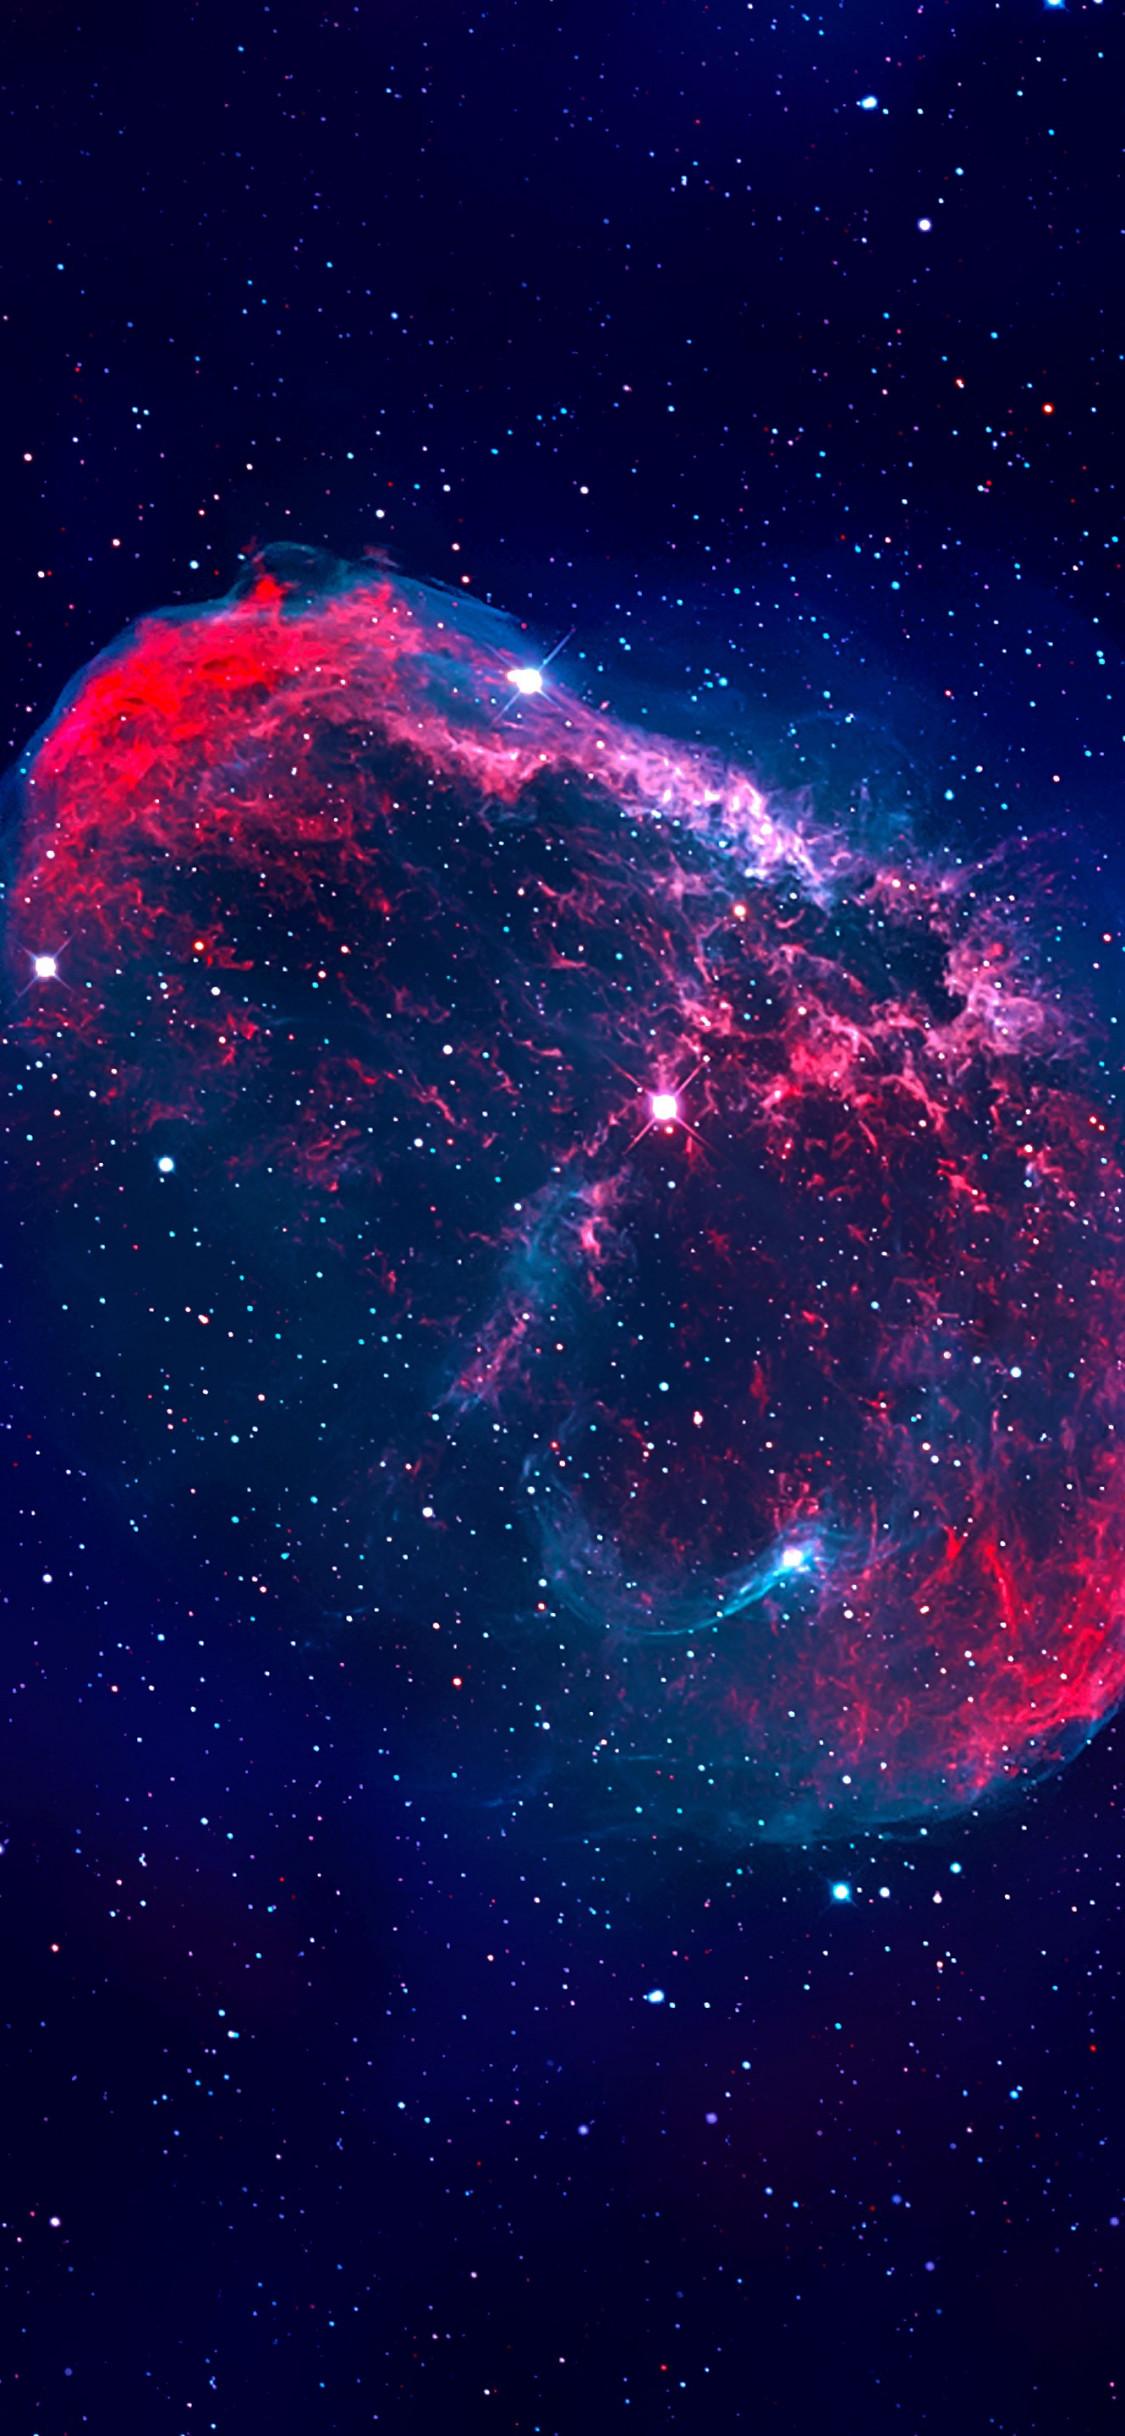 Download wallpaper: The Crescent nebula 1125x2436